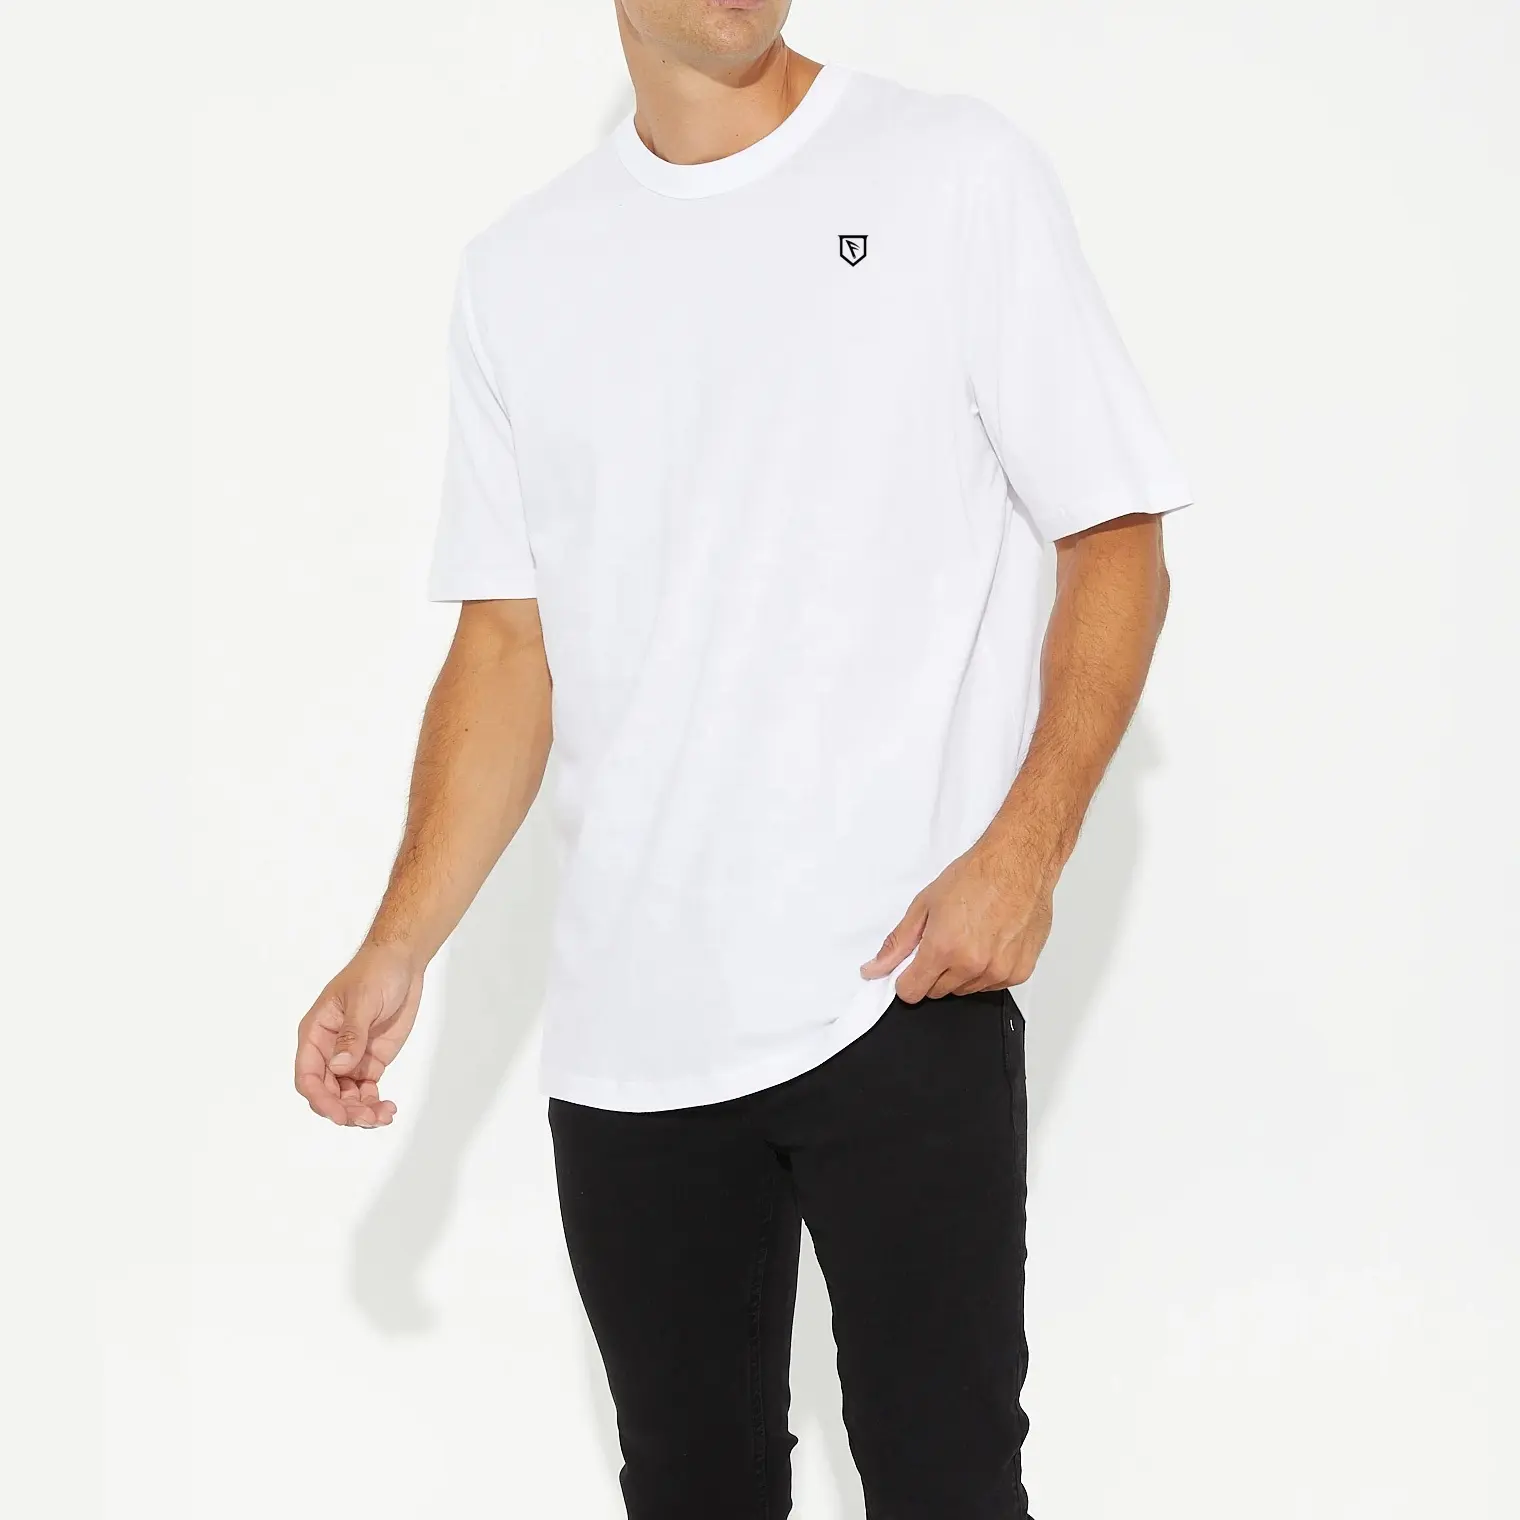 Camiseta blanca para hombre, camiseta de gran tamaño, Camiseta de algodón con hombros caídos en blanco liso, camiseta informal para hombre